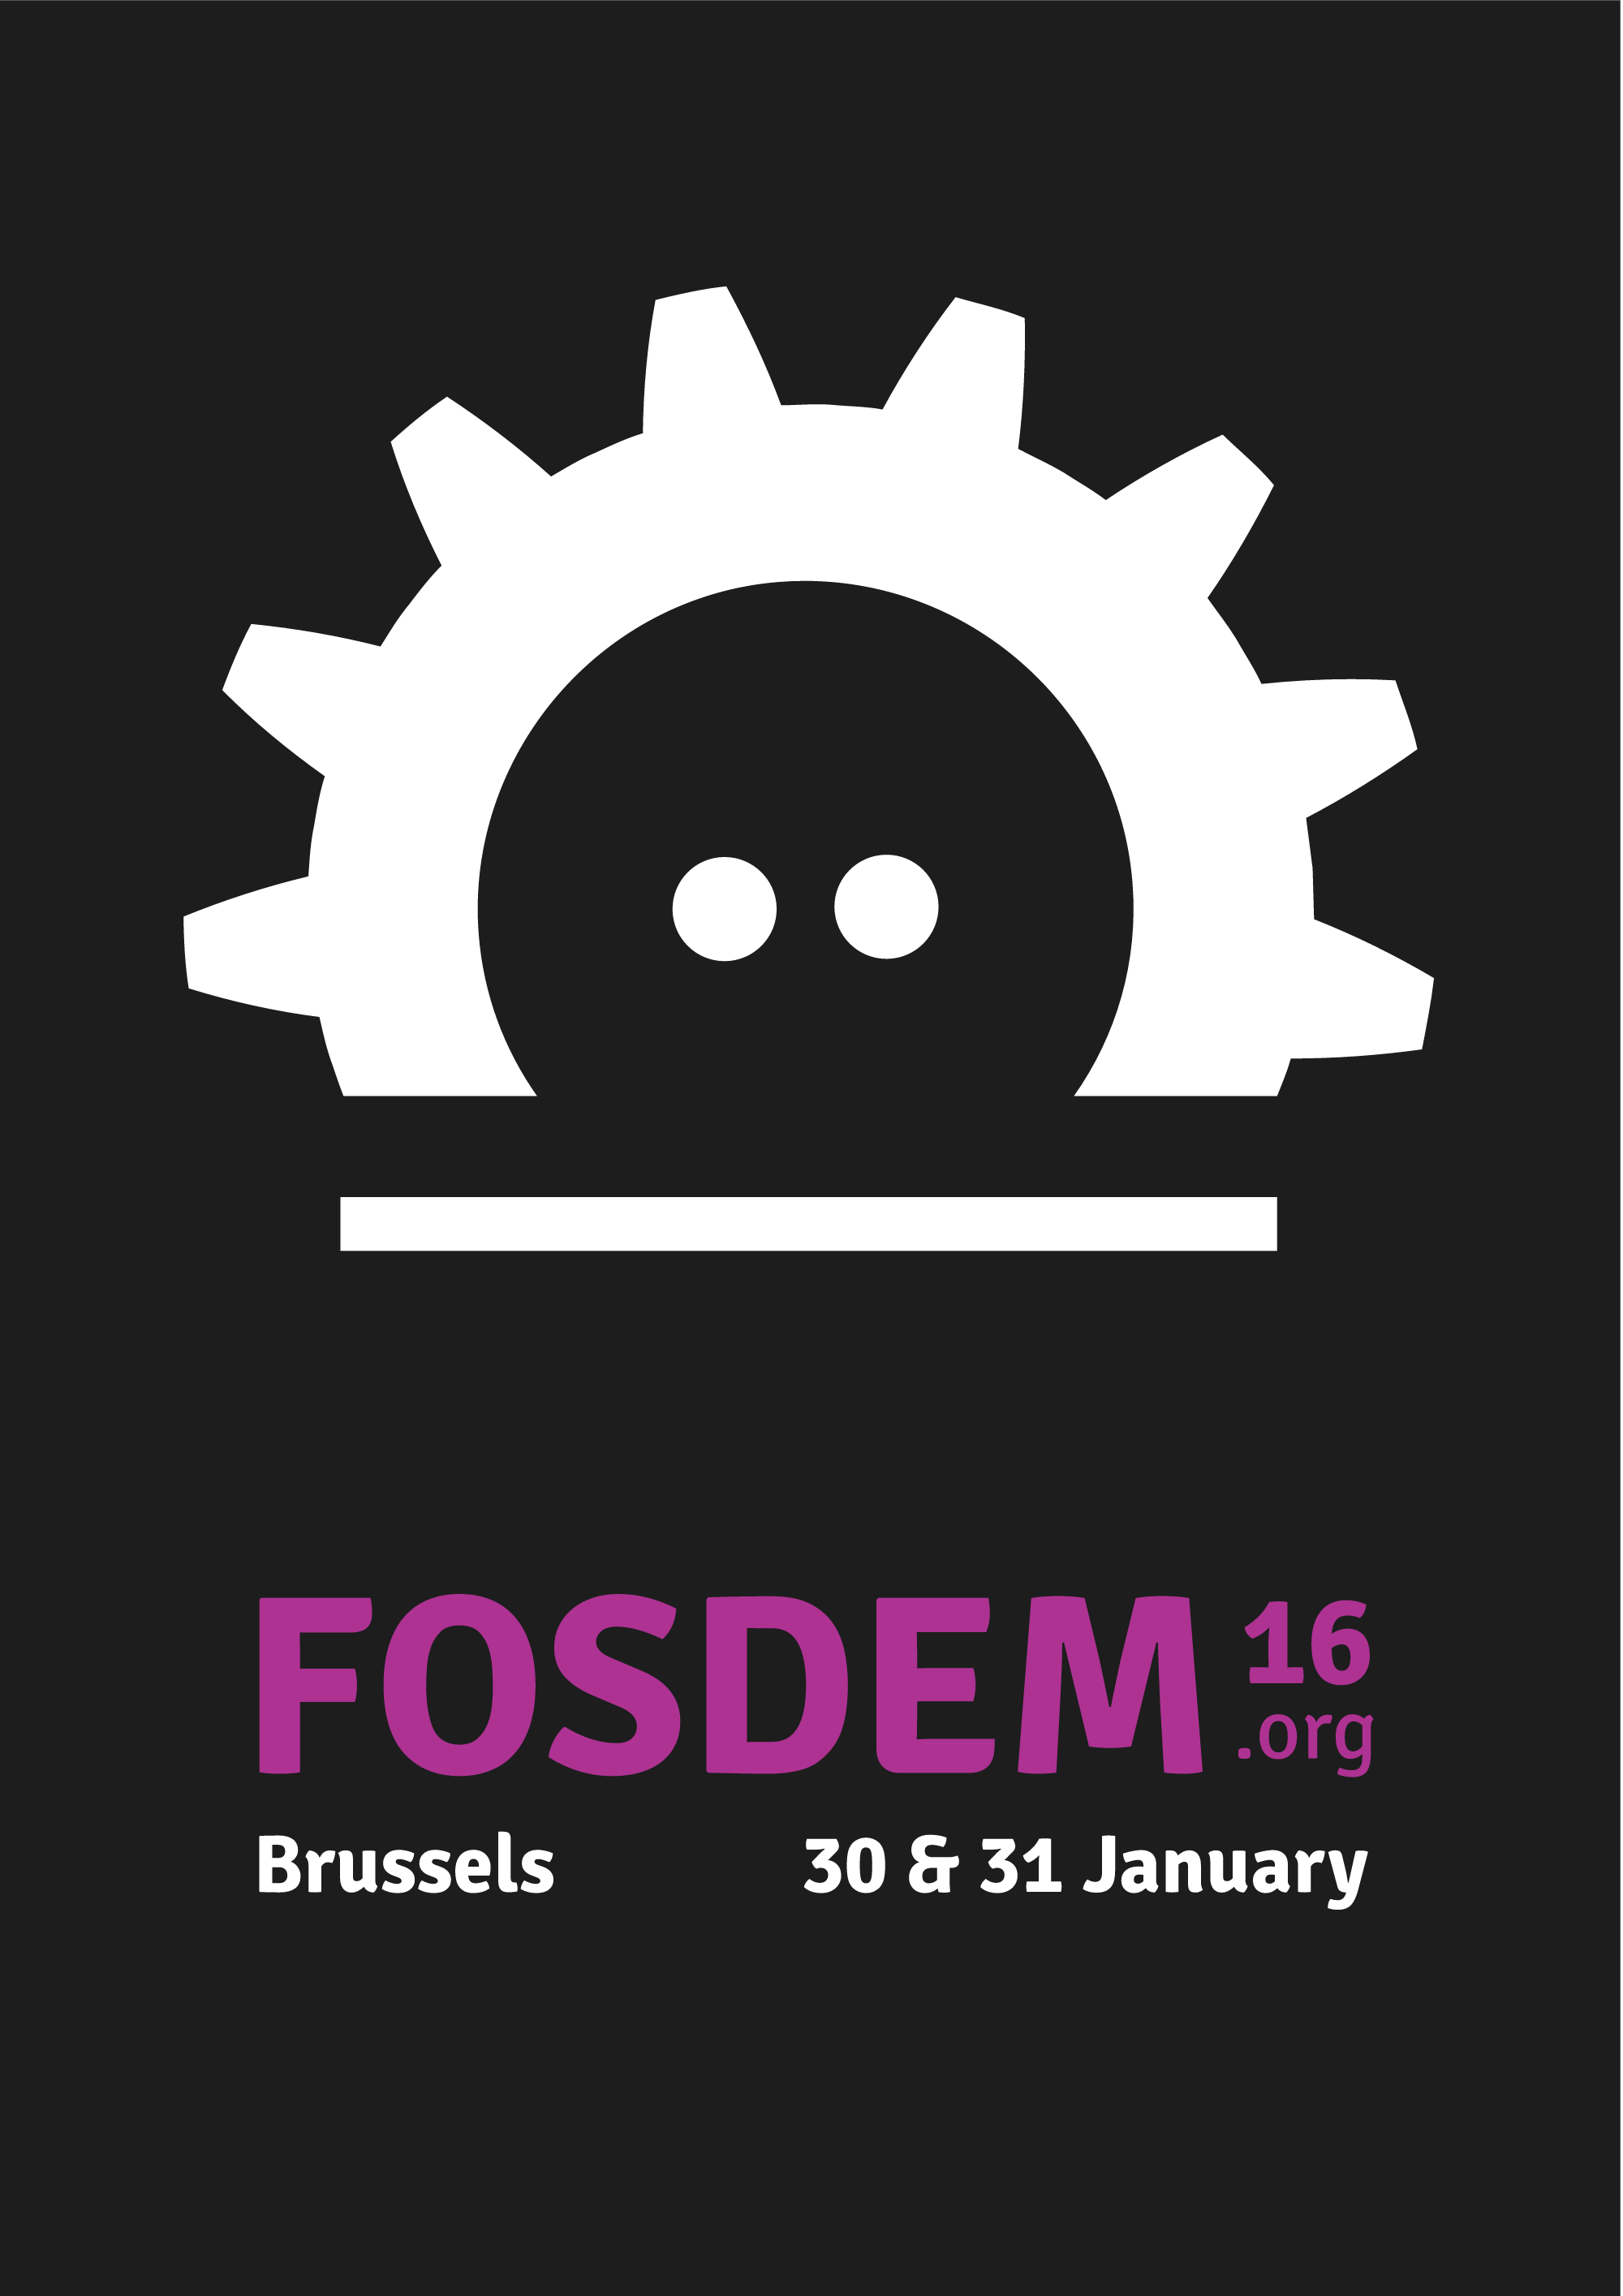 FOSDEM 2020 videos